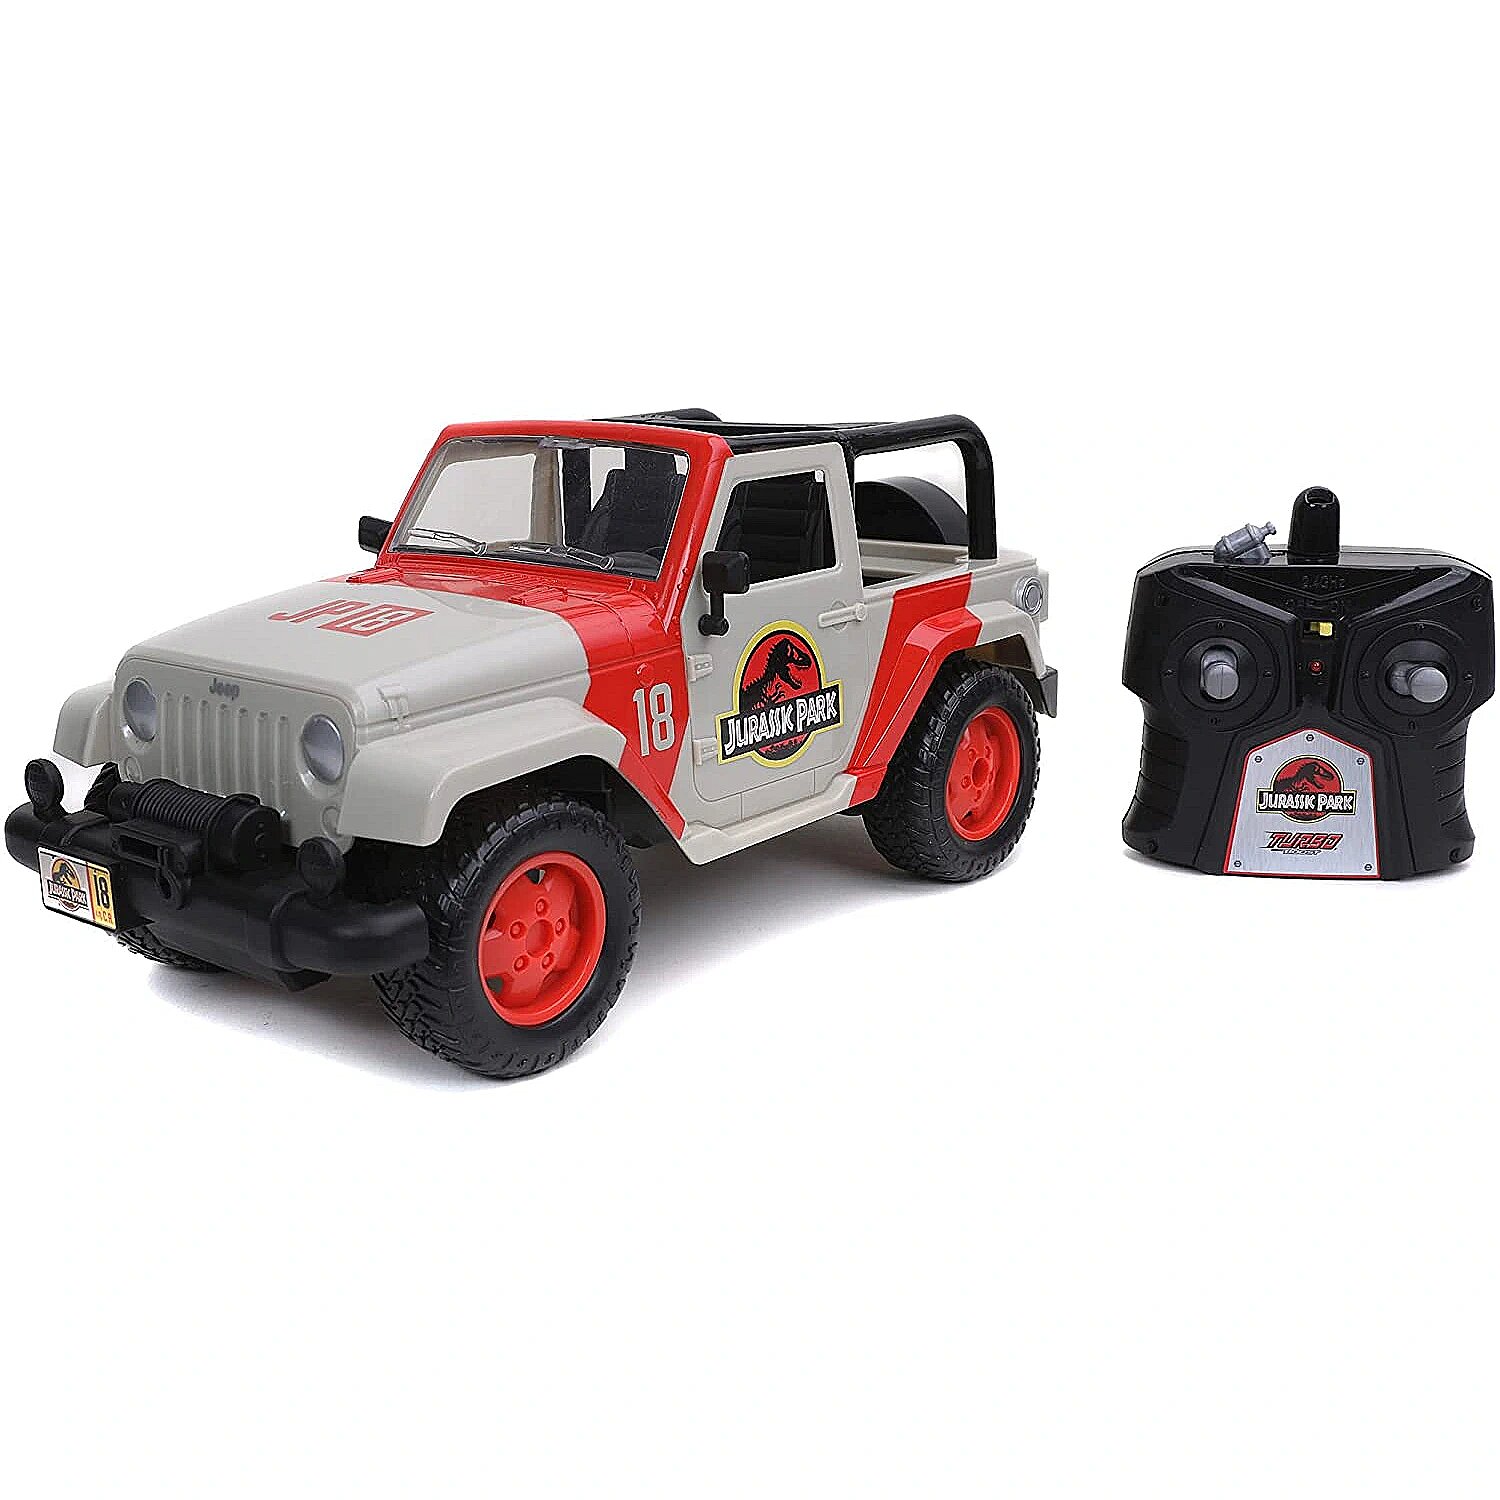 JADA TOYS Jurassic Park RC Jeep Wrangler (grey/red, 1:16) (253256000)